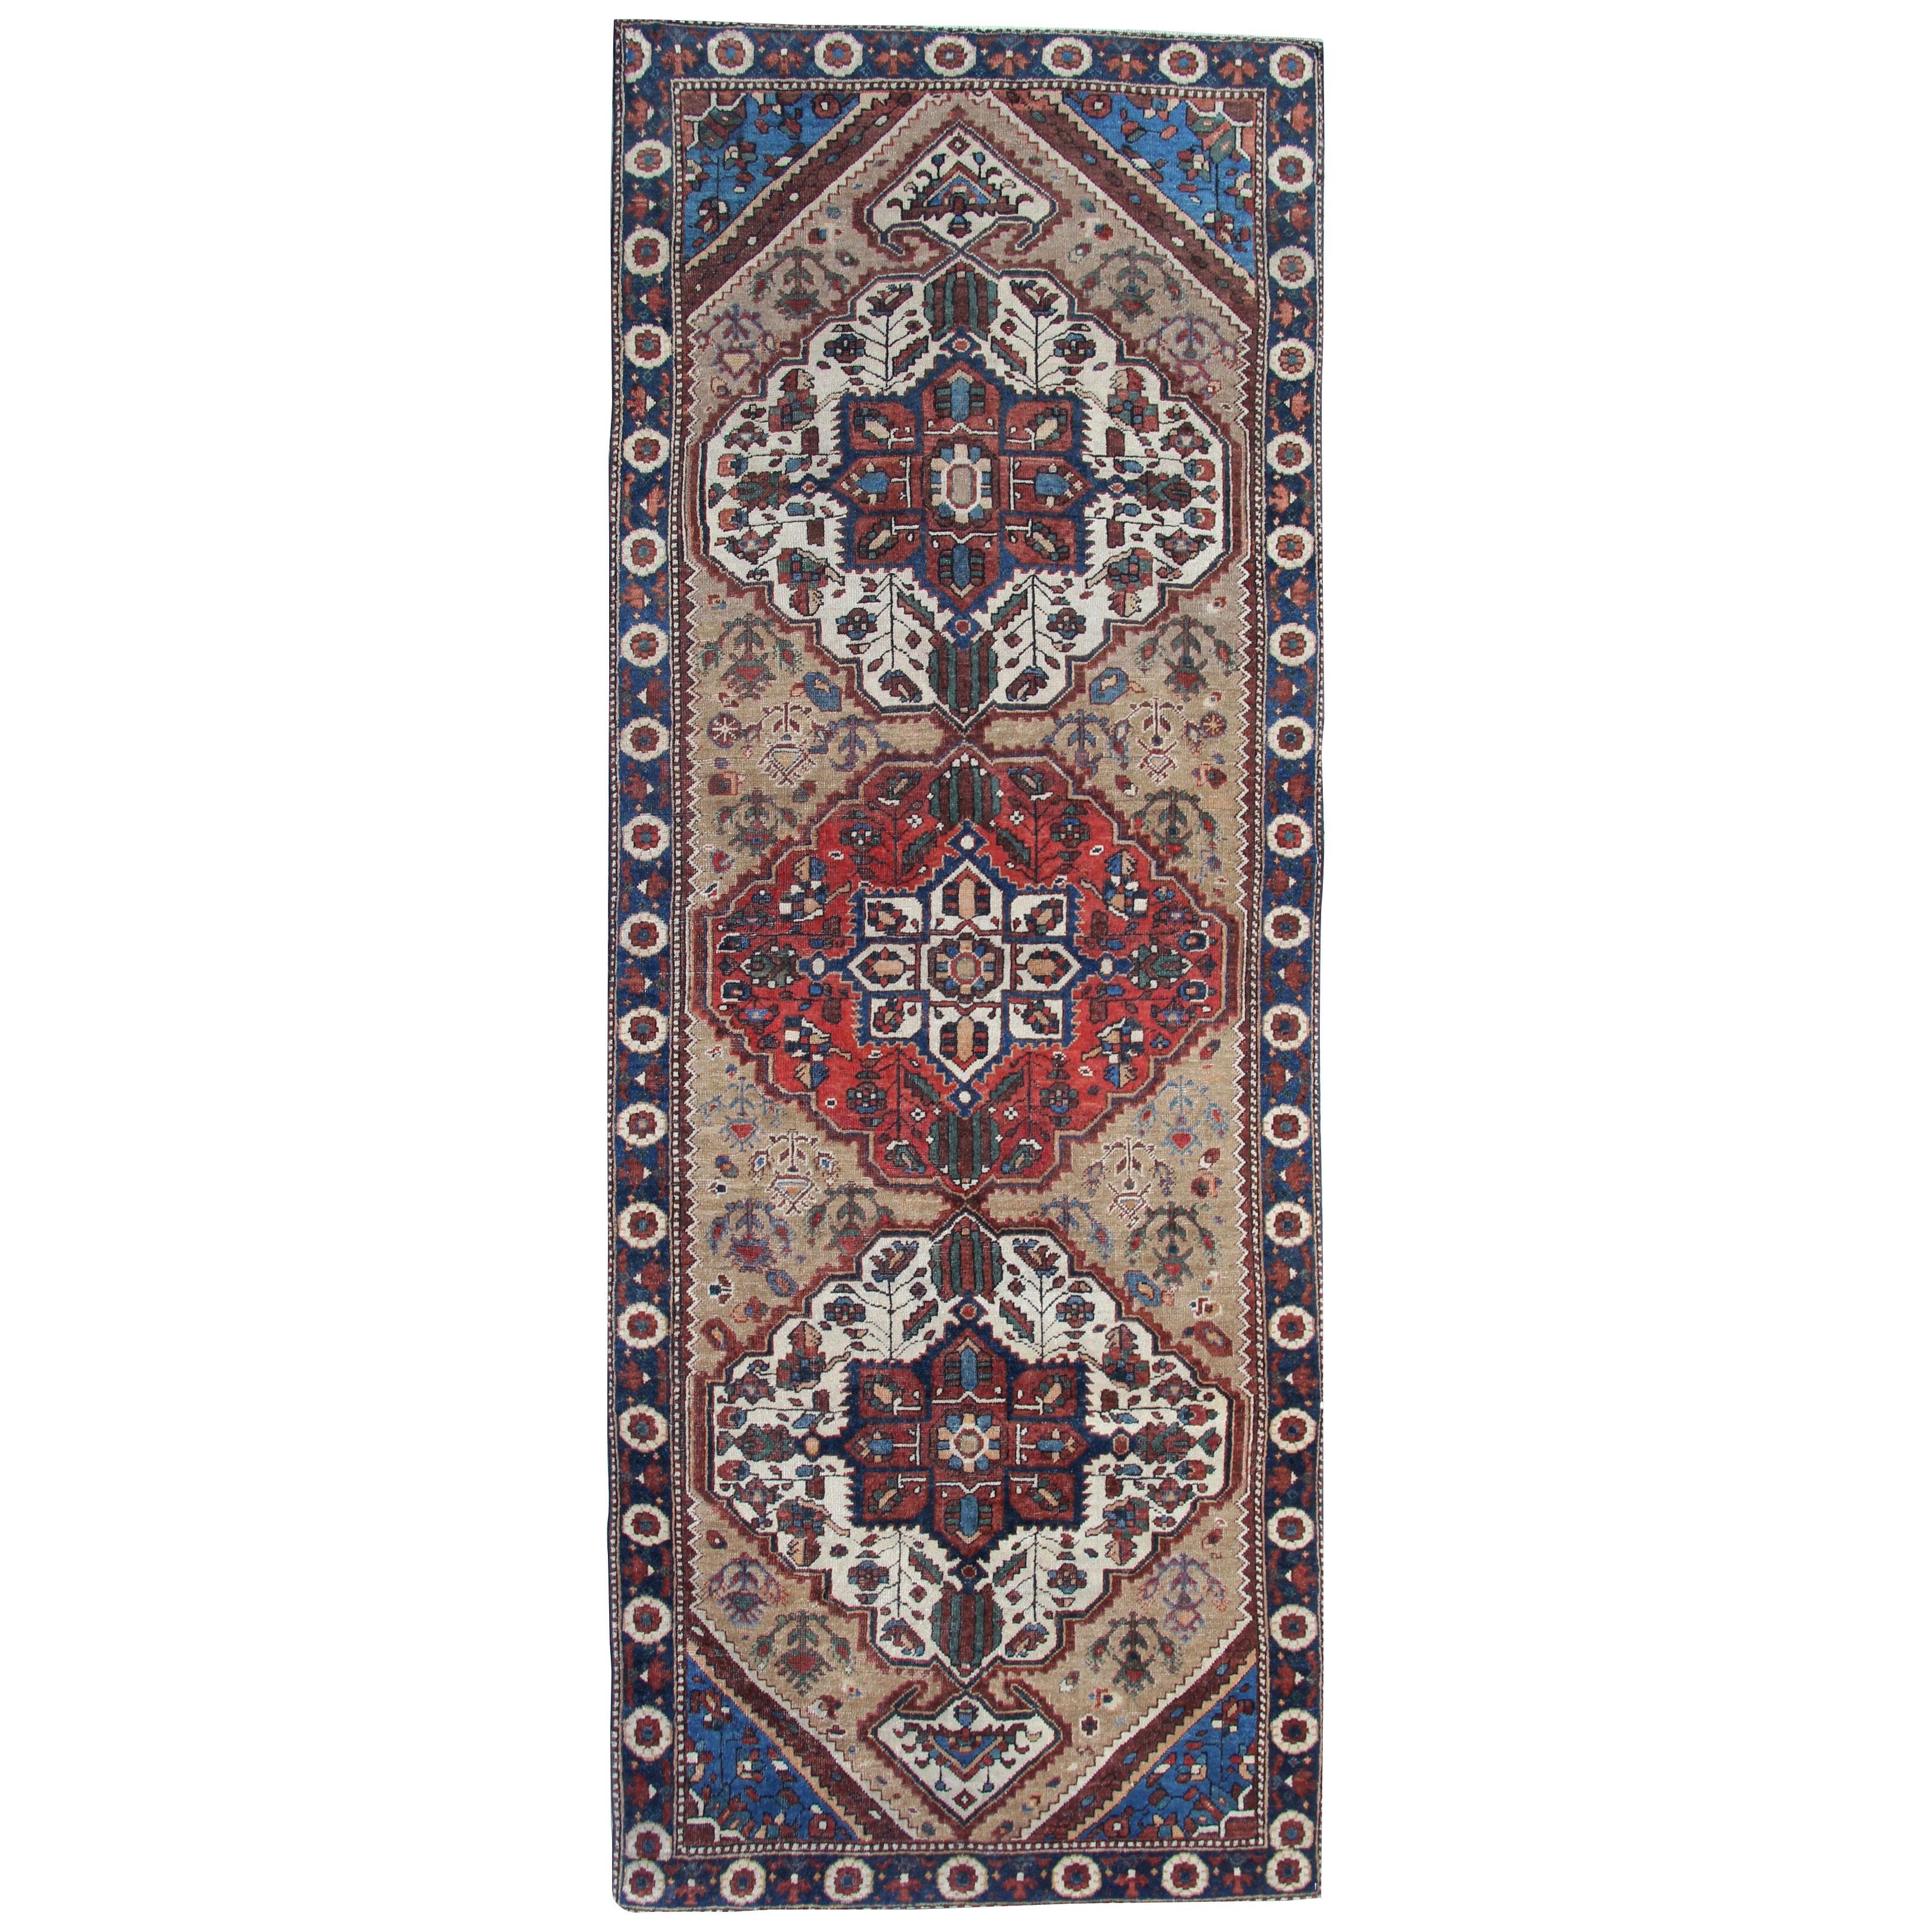 Antique Caucasian Runner Rug Long Traditional Azerbaijan Carpet Rug- 112x297cm 